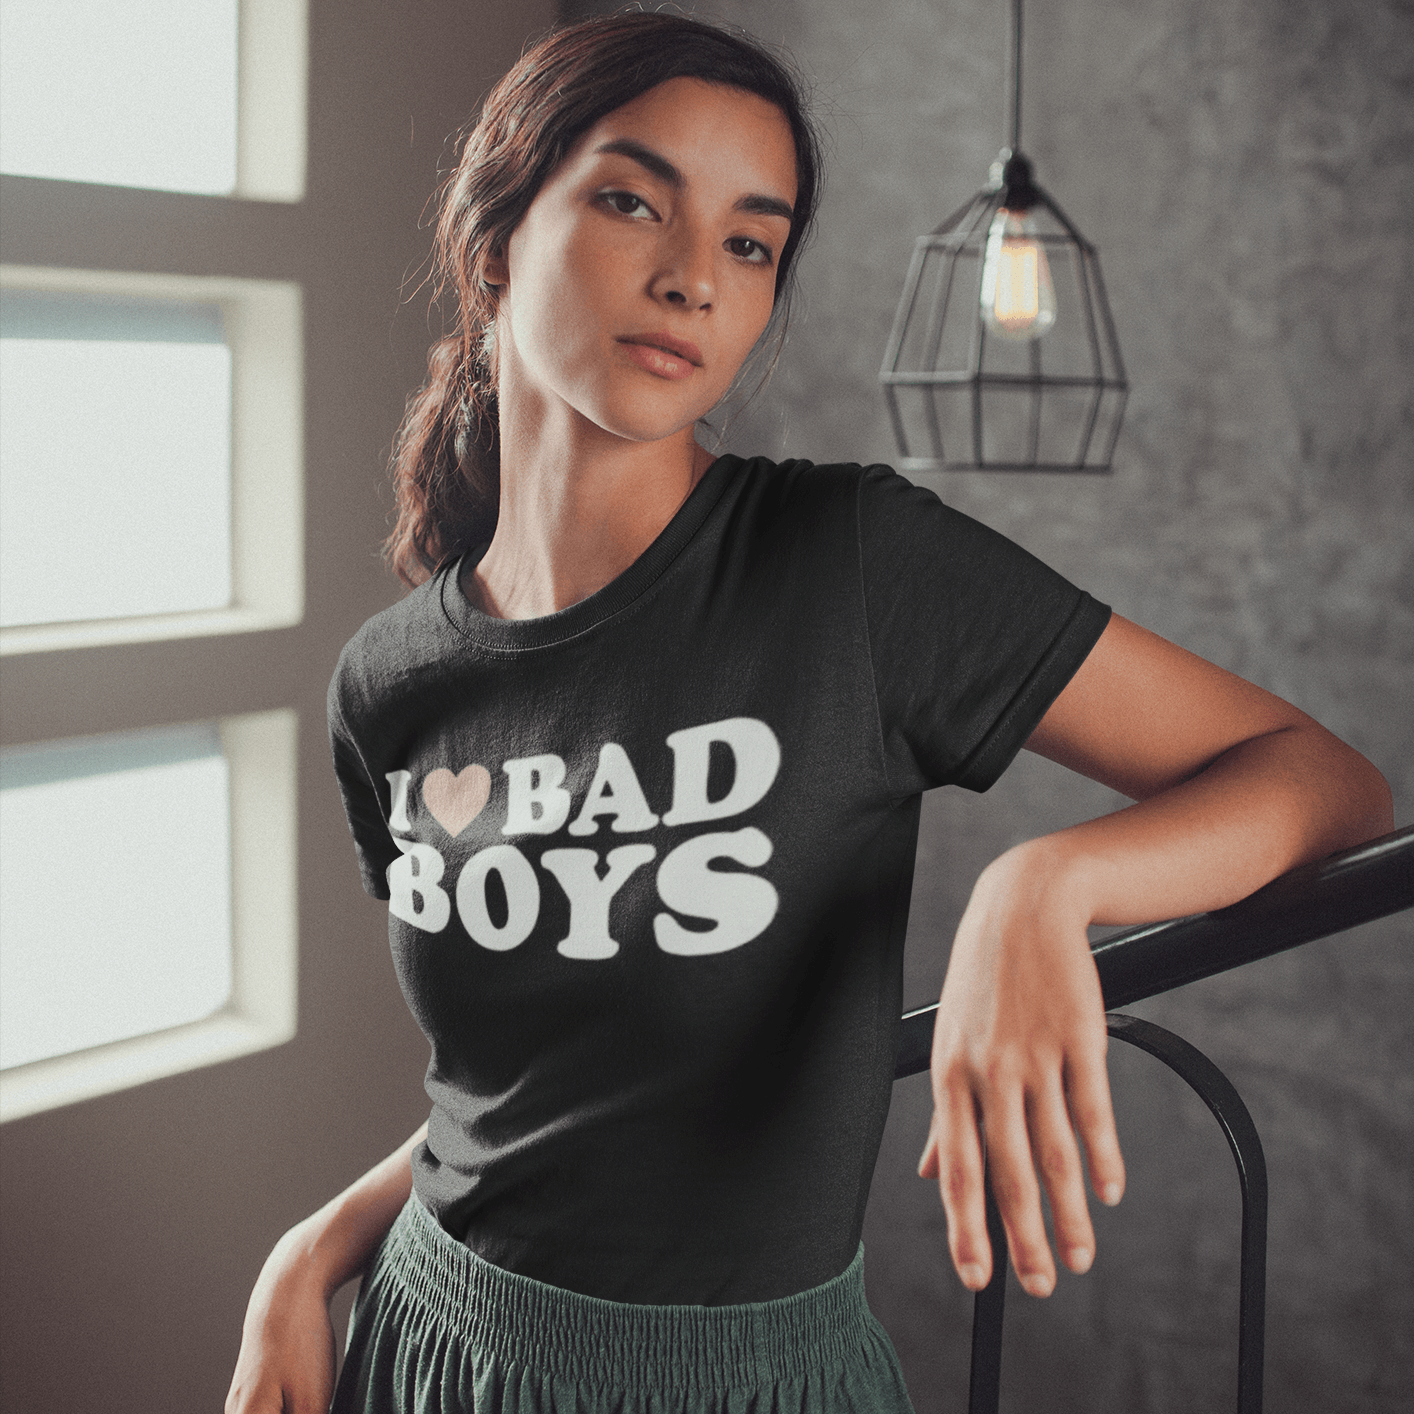 I Love Bad Boys T-shirt Top Koala Tee Short Sleeve Unisex Tee - TopKoalaTee